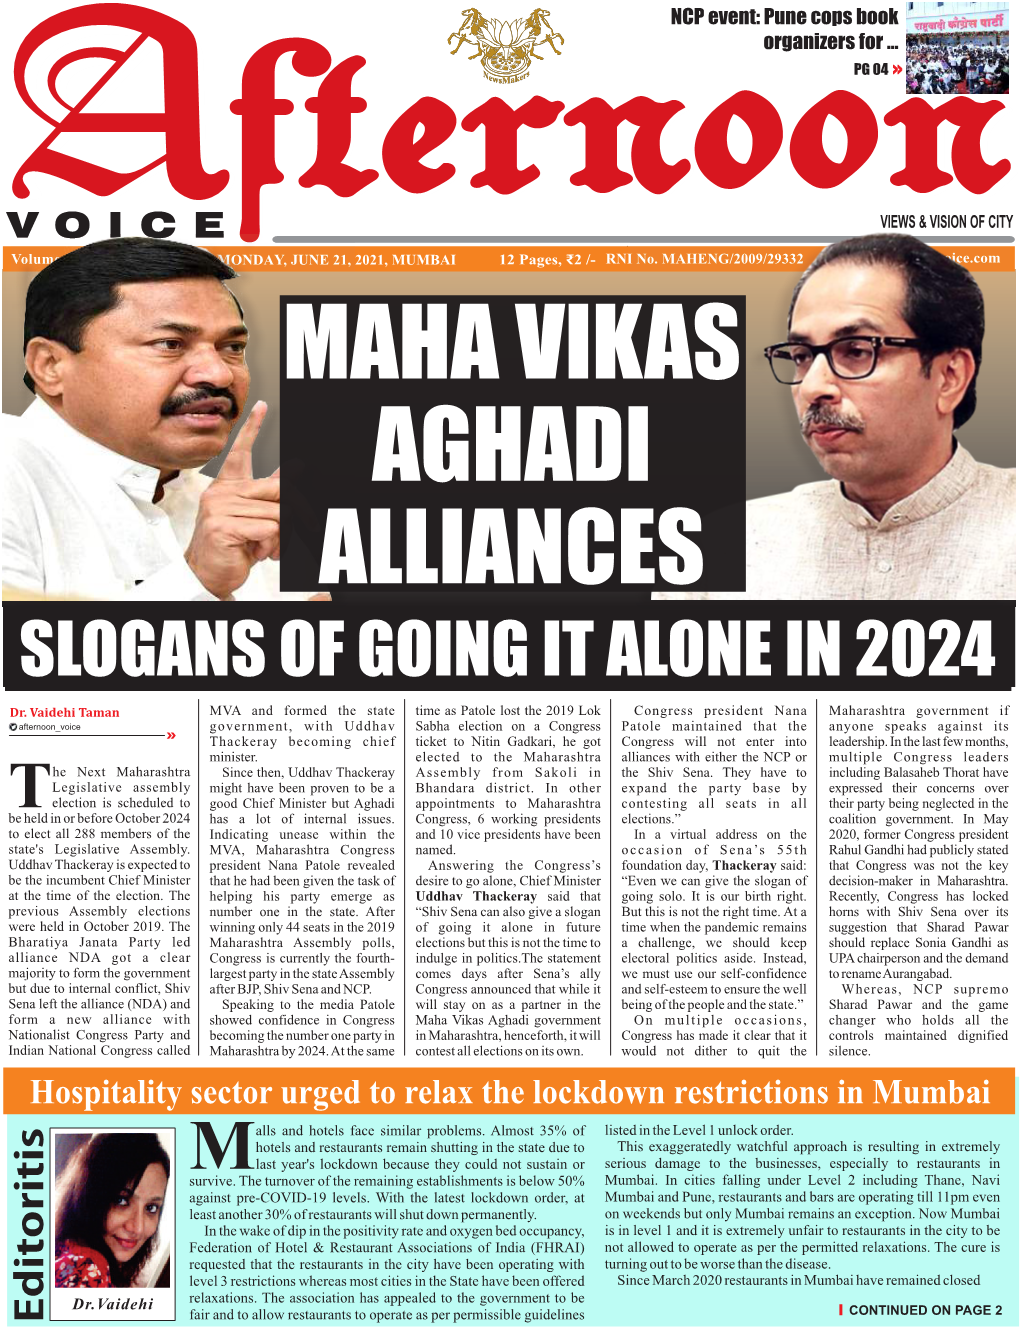 Maha Vikas Aghadi Alliances Slogans of Going It Alone in 2024